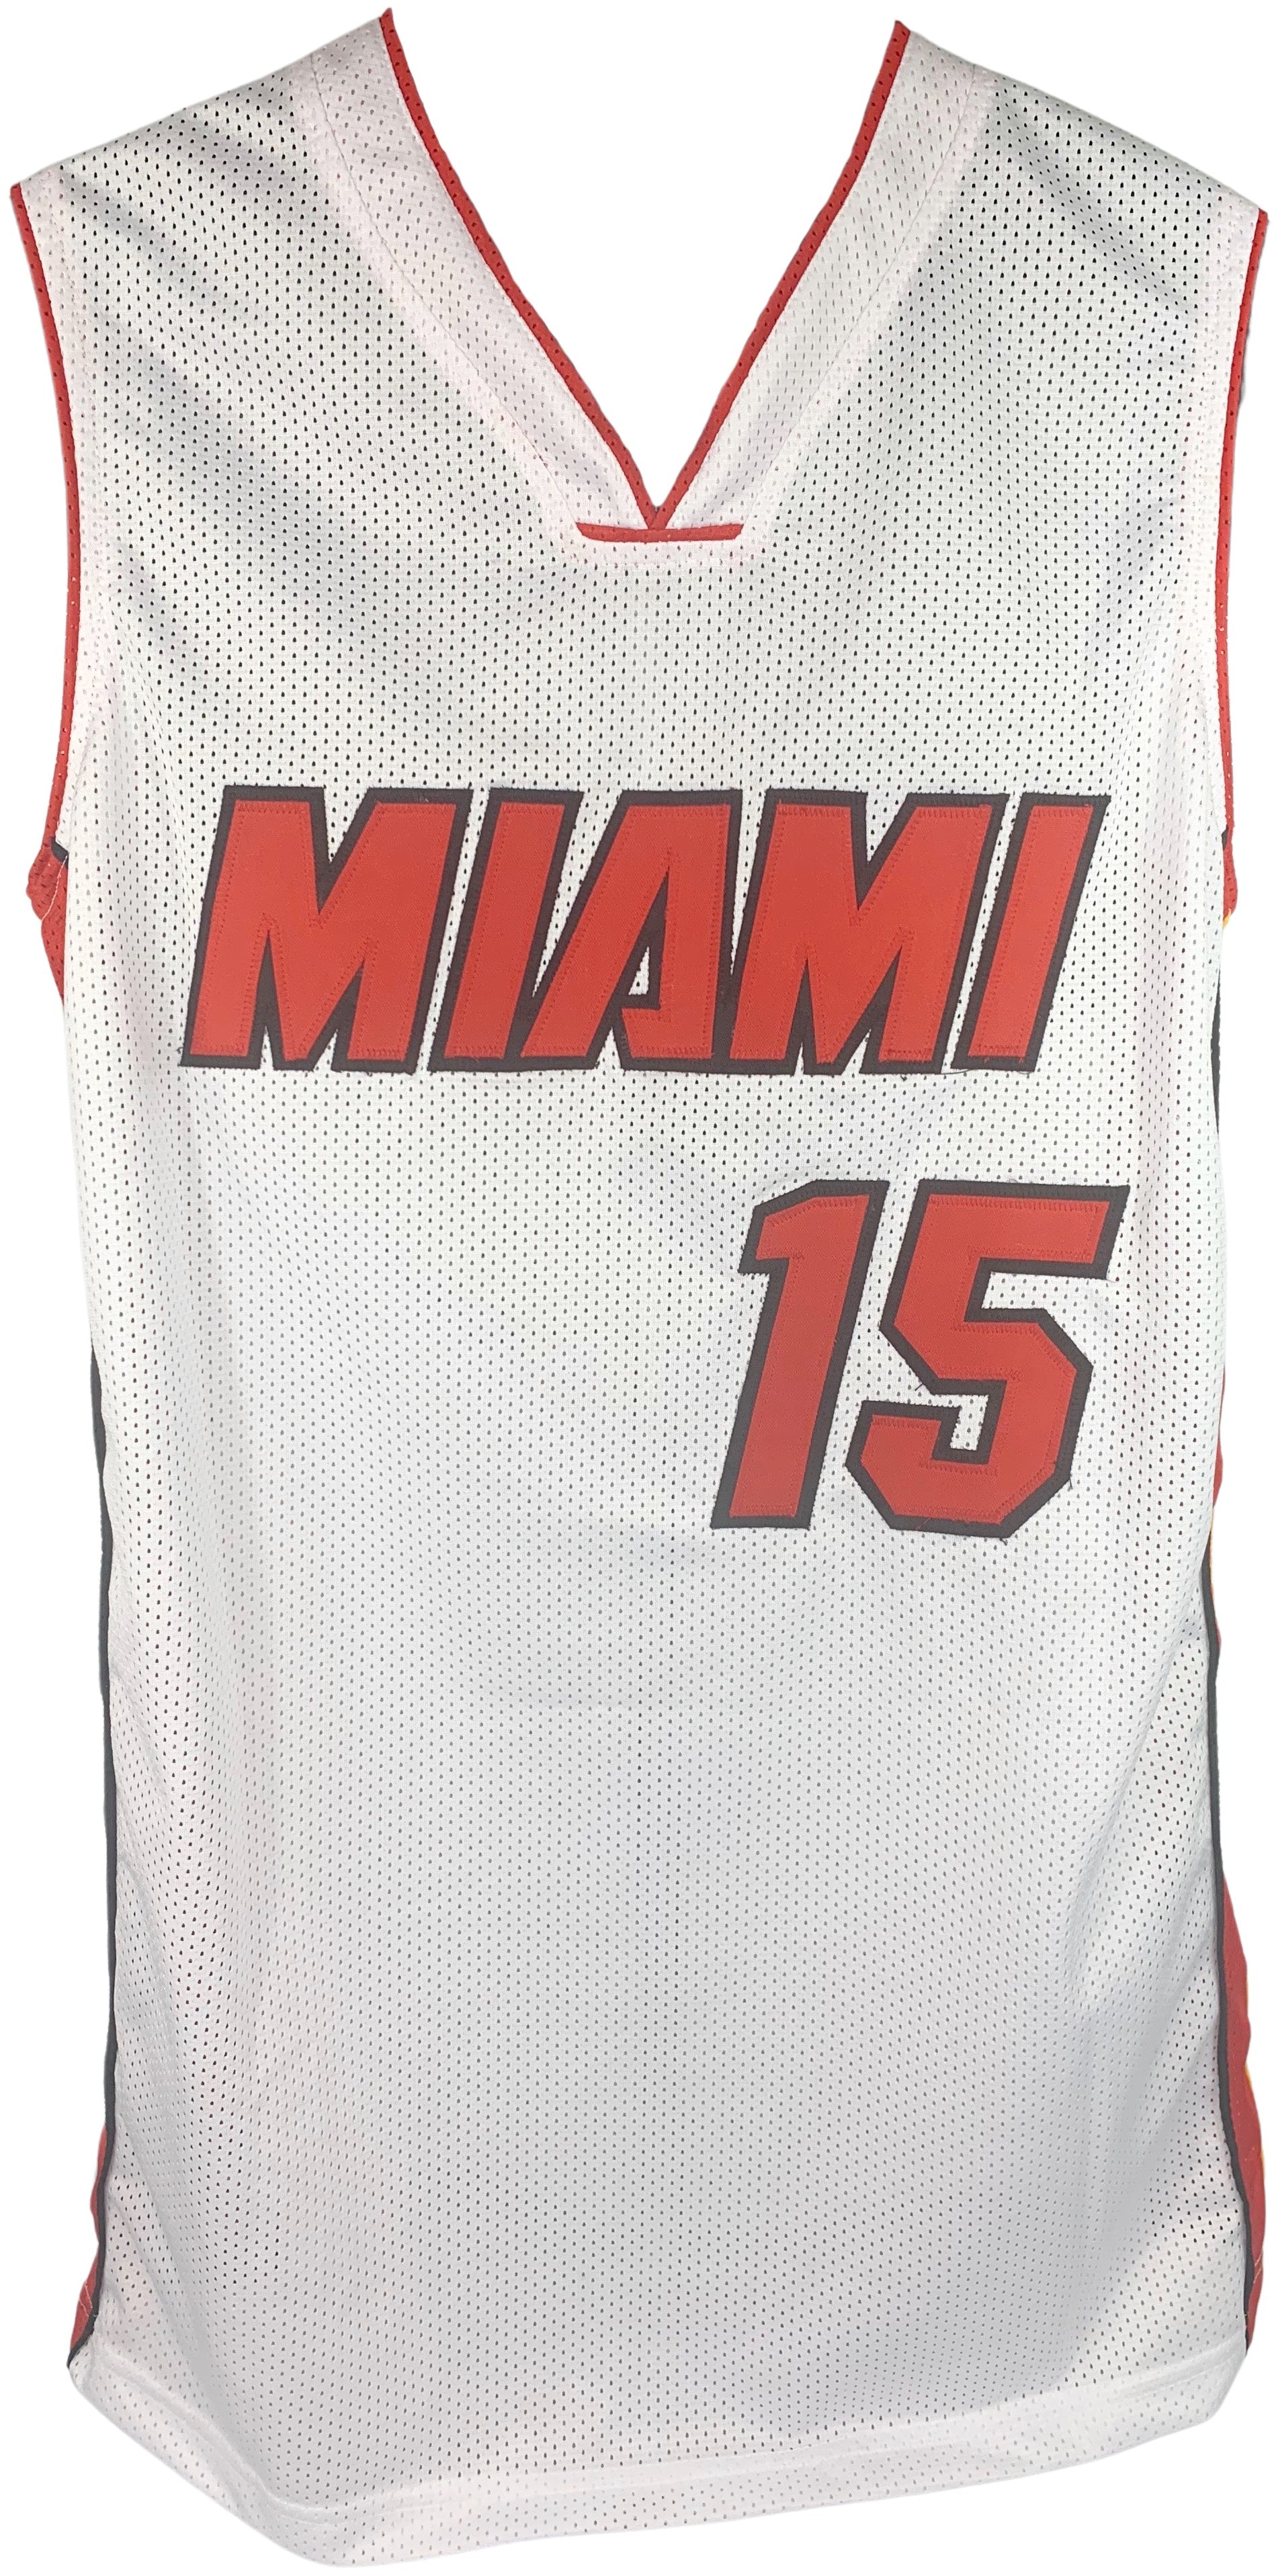 Mario Chalmers Signed Miami Heat Jersey Inscribed